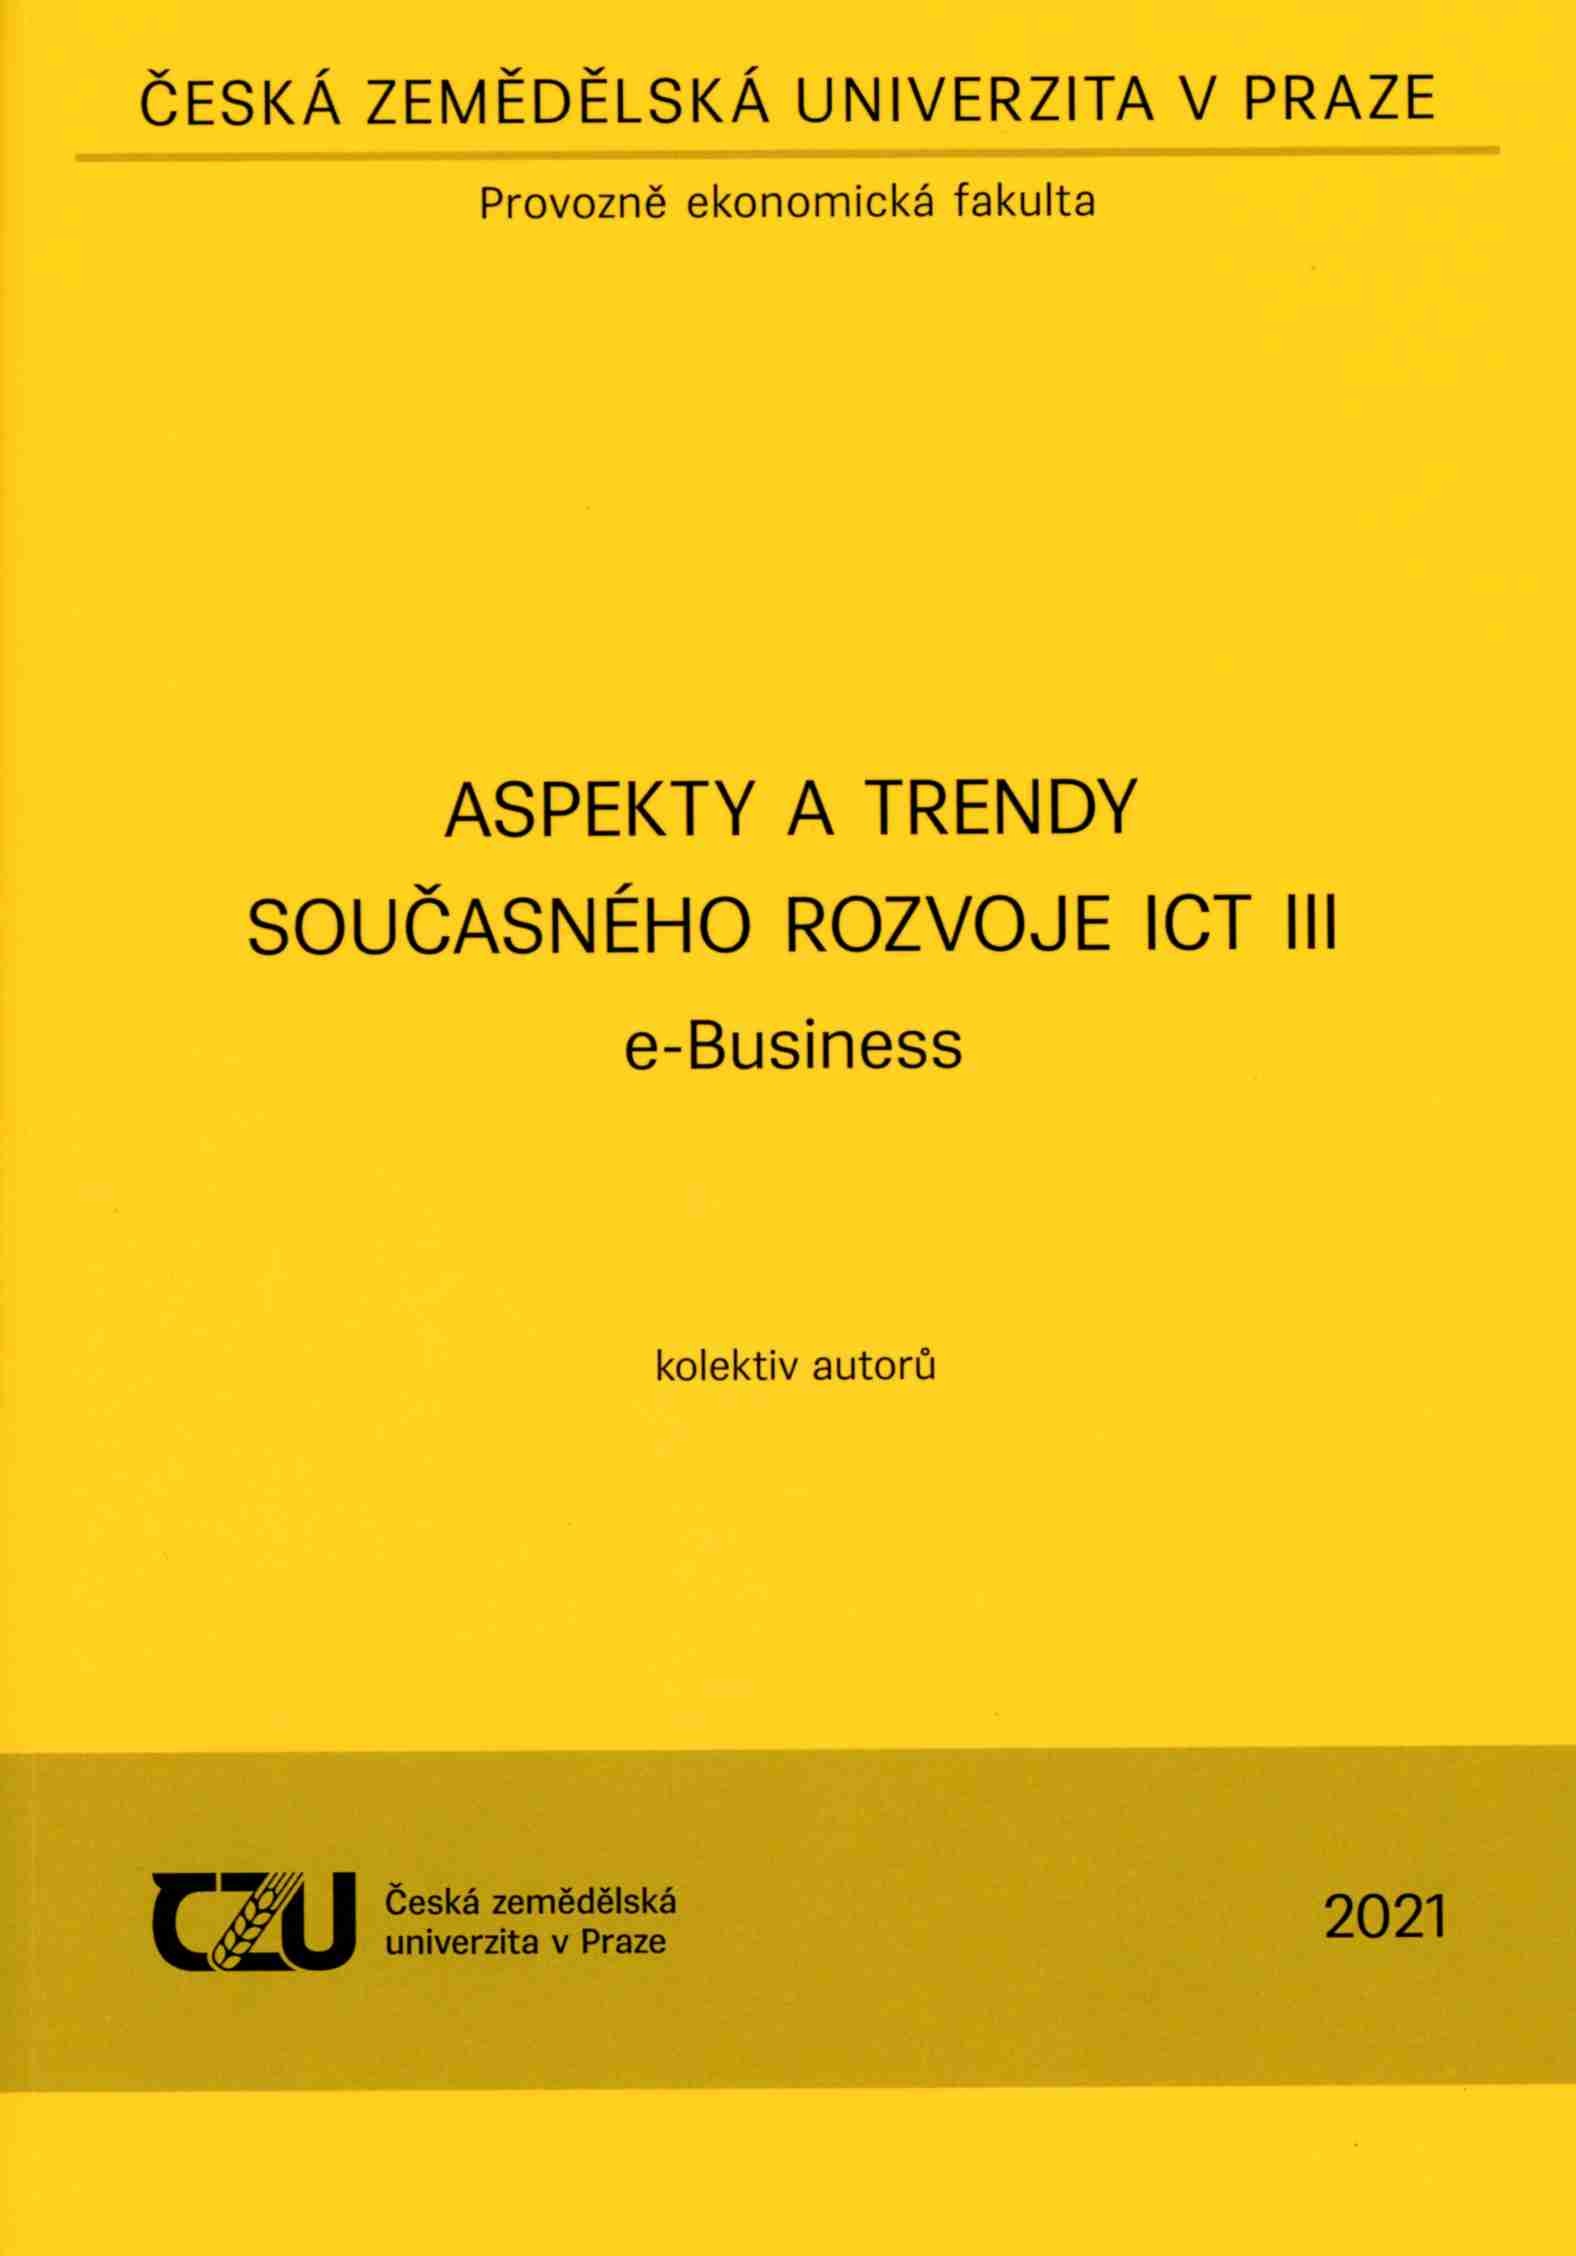 Aspekty a trendy současného rozvoje ICT III e-Business, 346